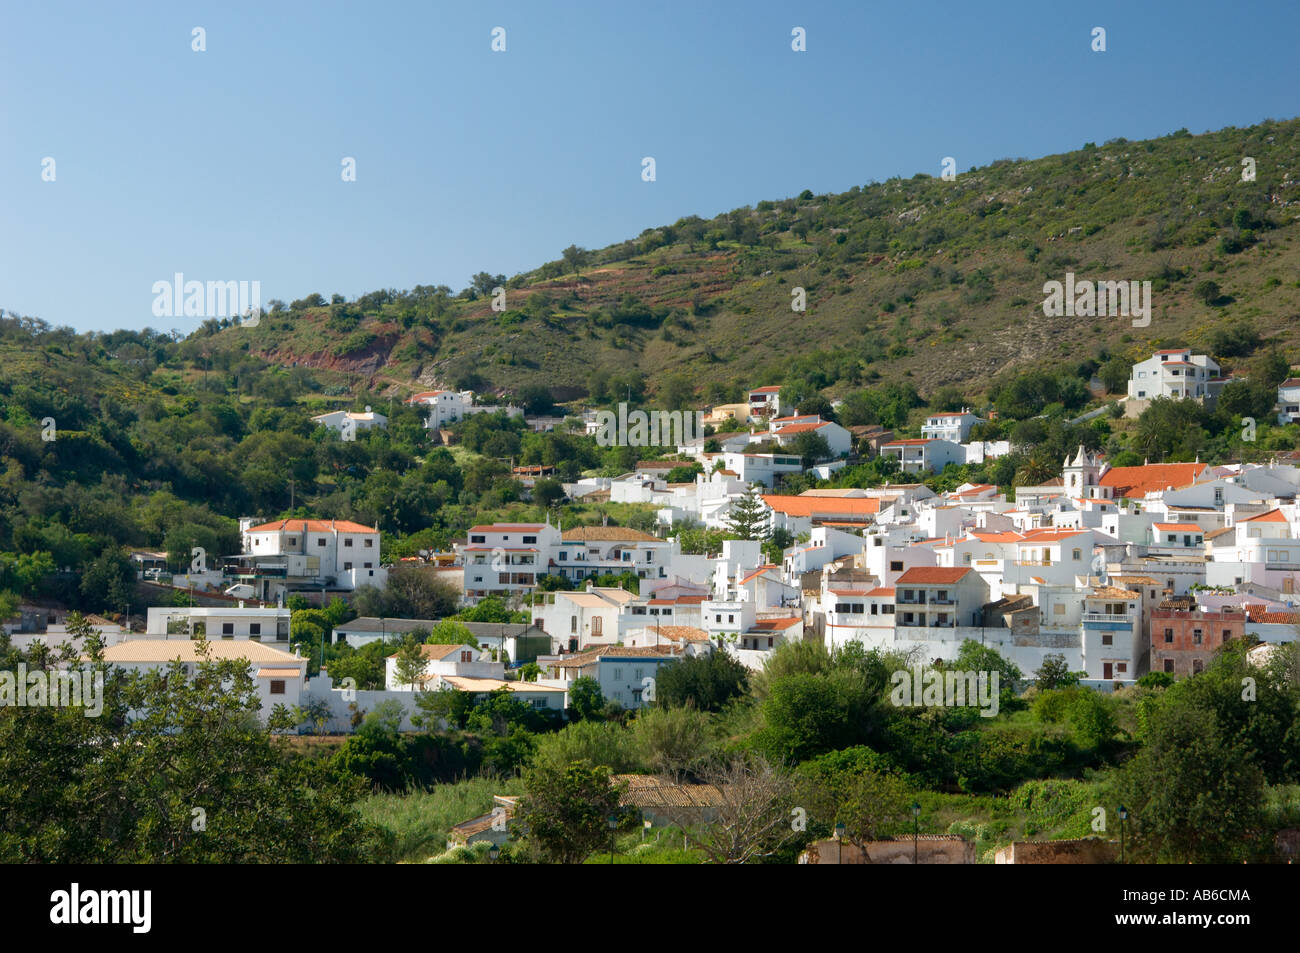 Portugal the Algarve, Alte village in the hinterland hills Stock Photo